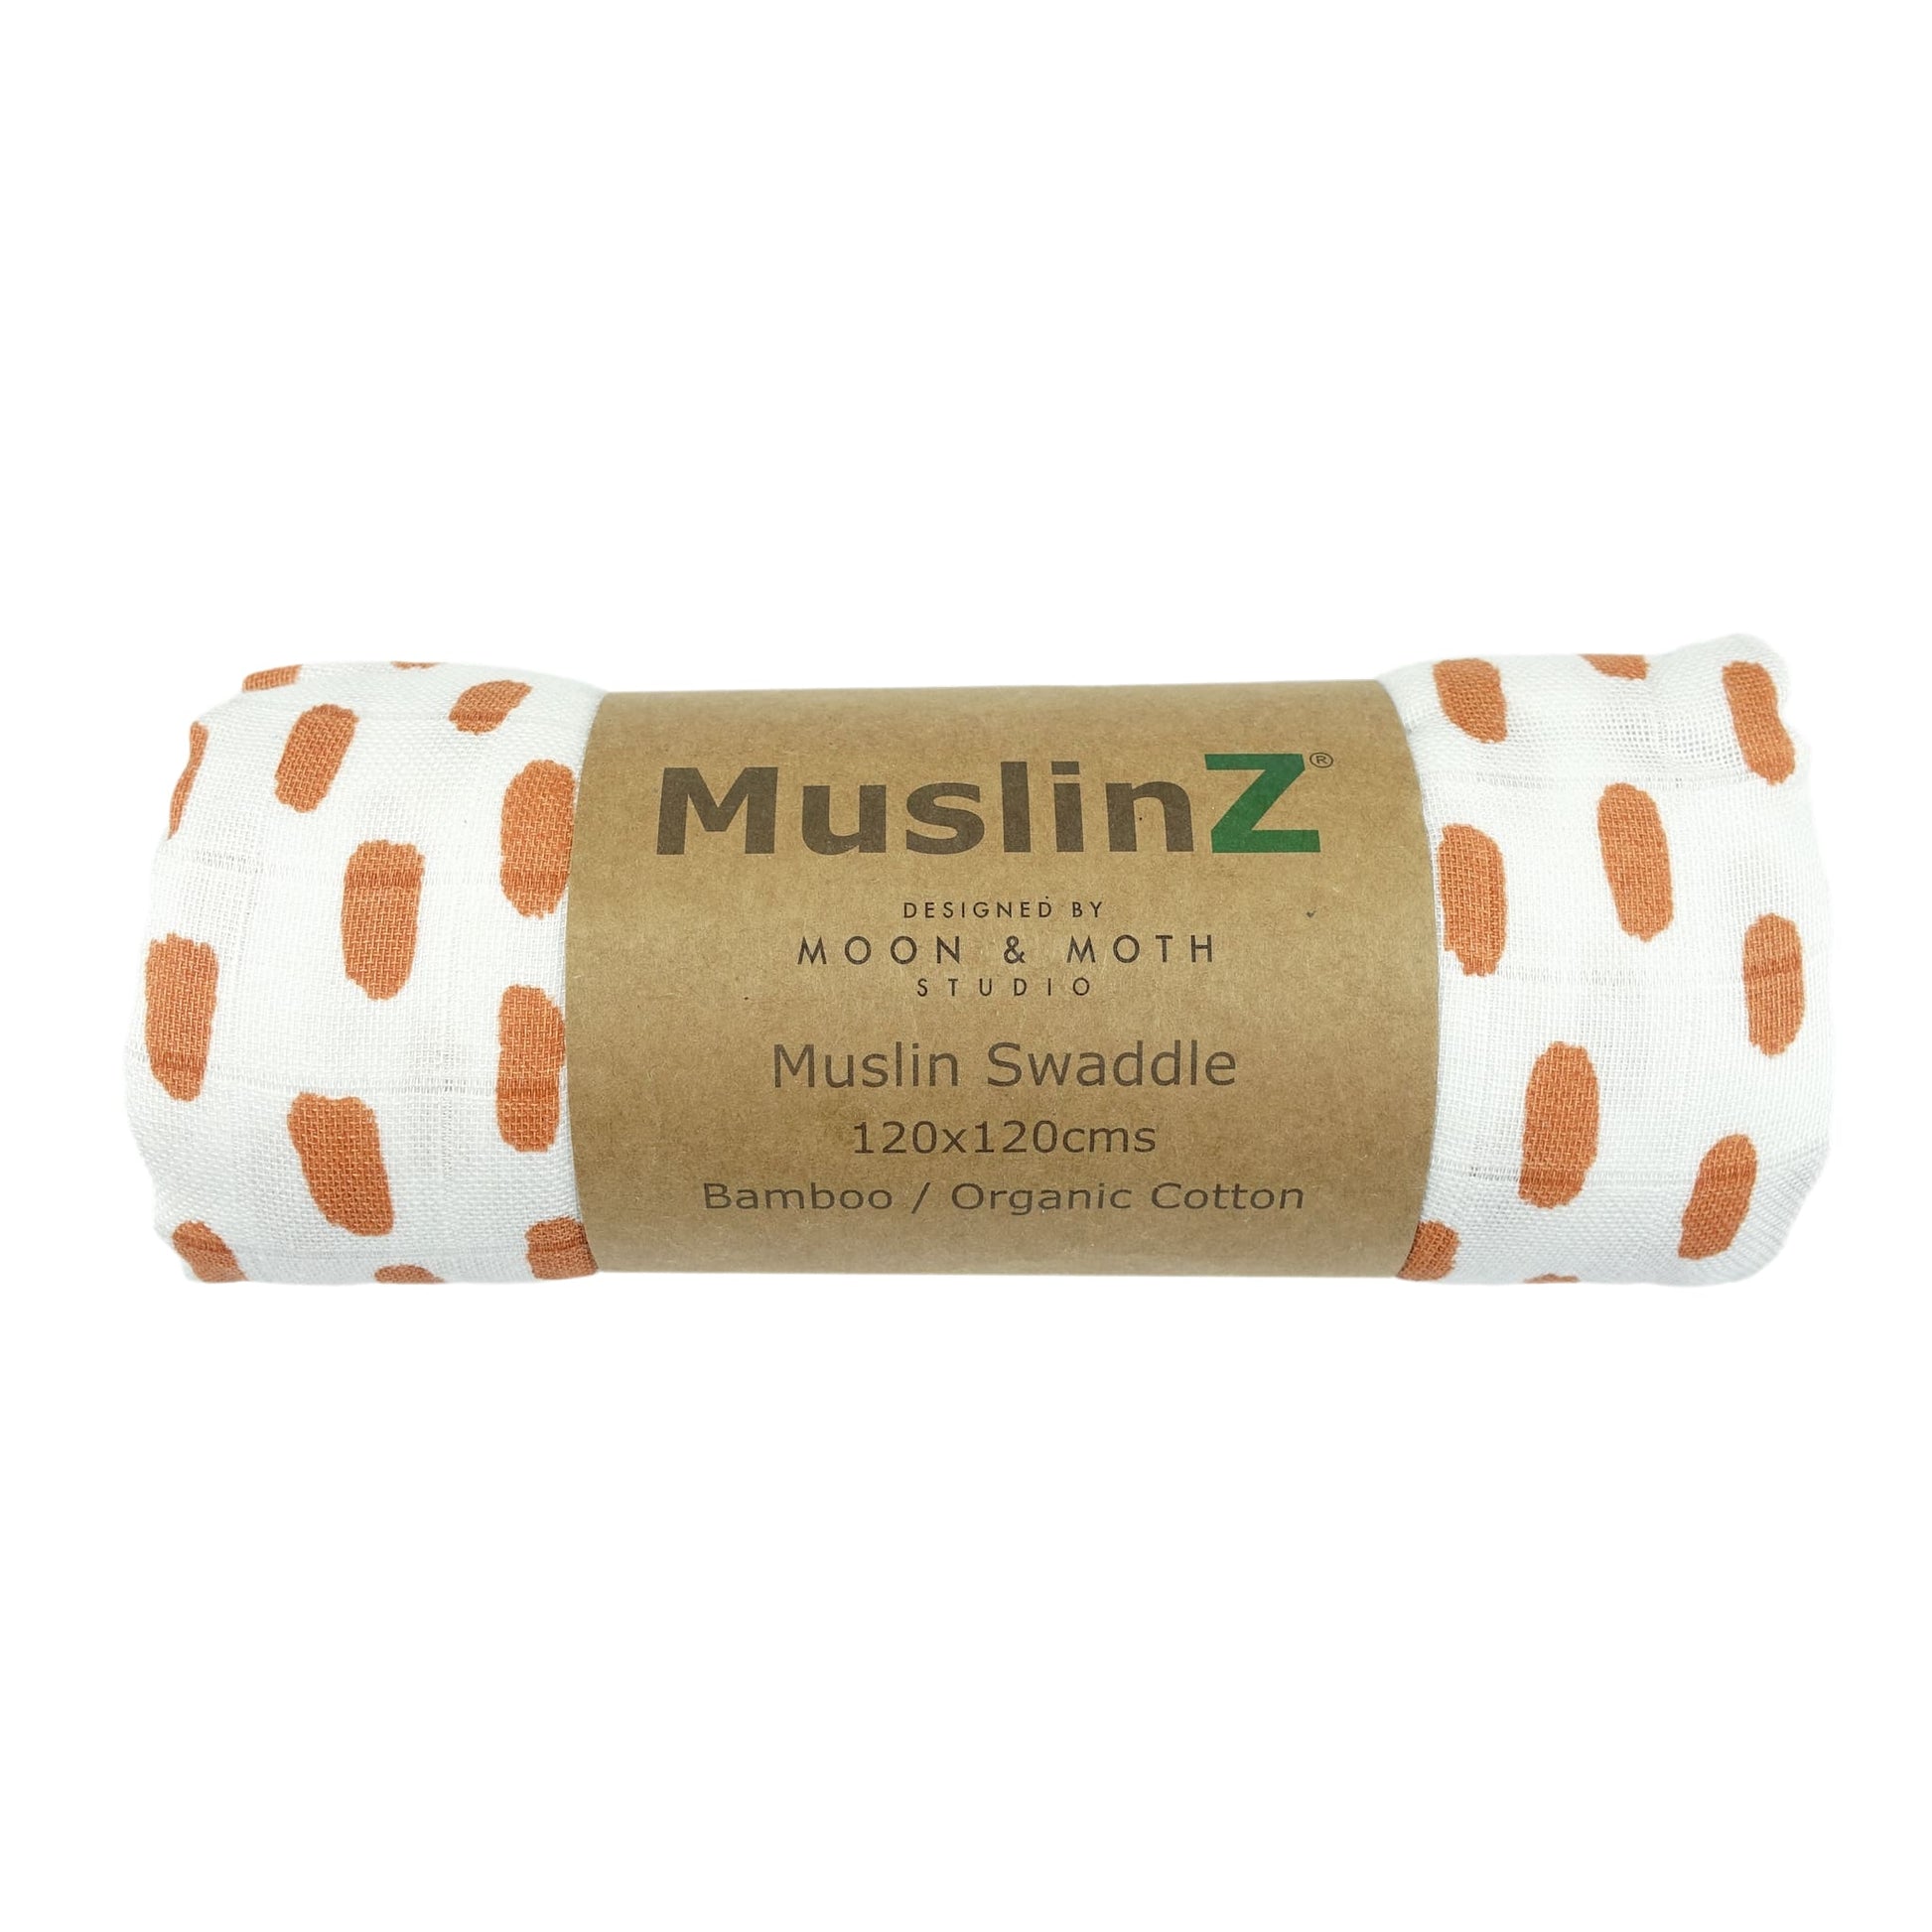 MuslinZ Bamboo/Organic Cotton Muslin Swaddle Spot